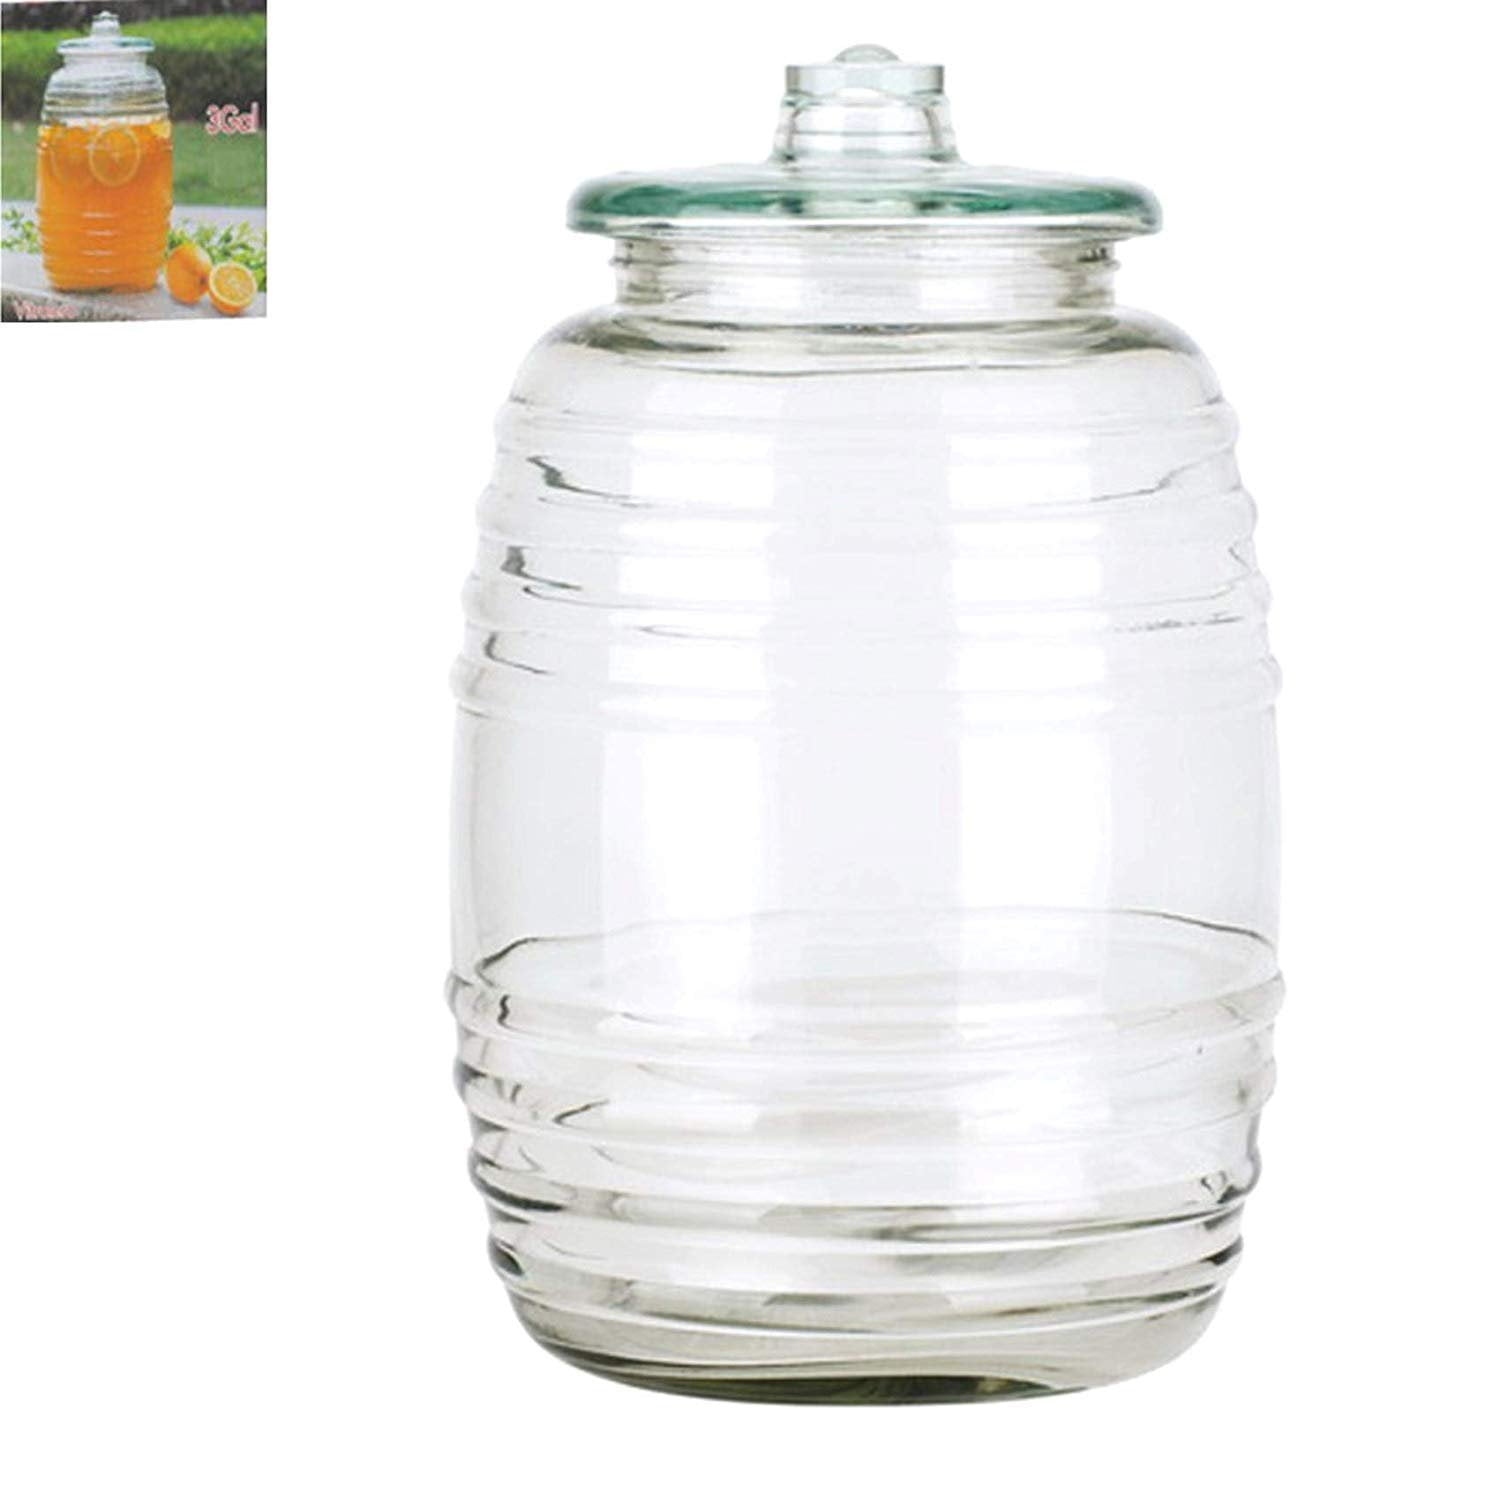 Walmart Del Rio - 5 gallon plastic barrel jug with lid.. Great for